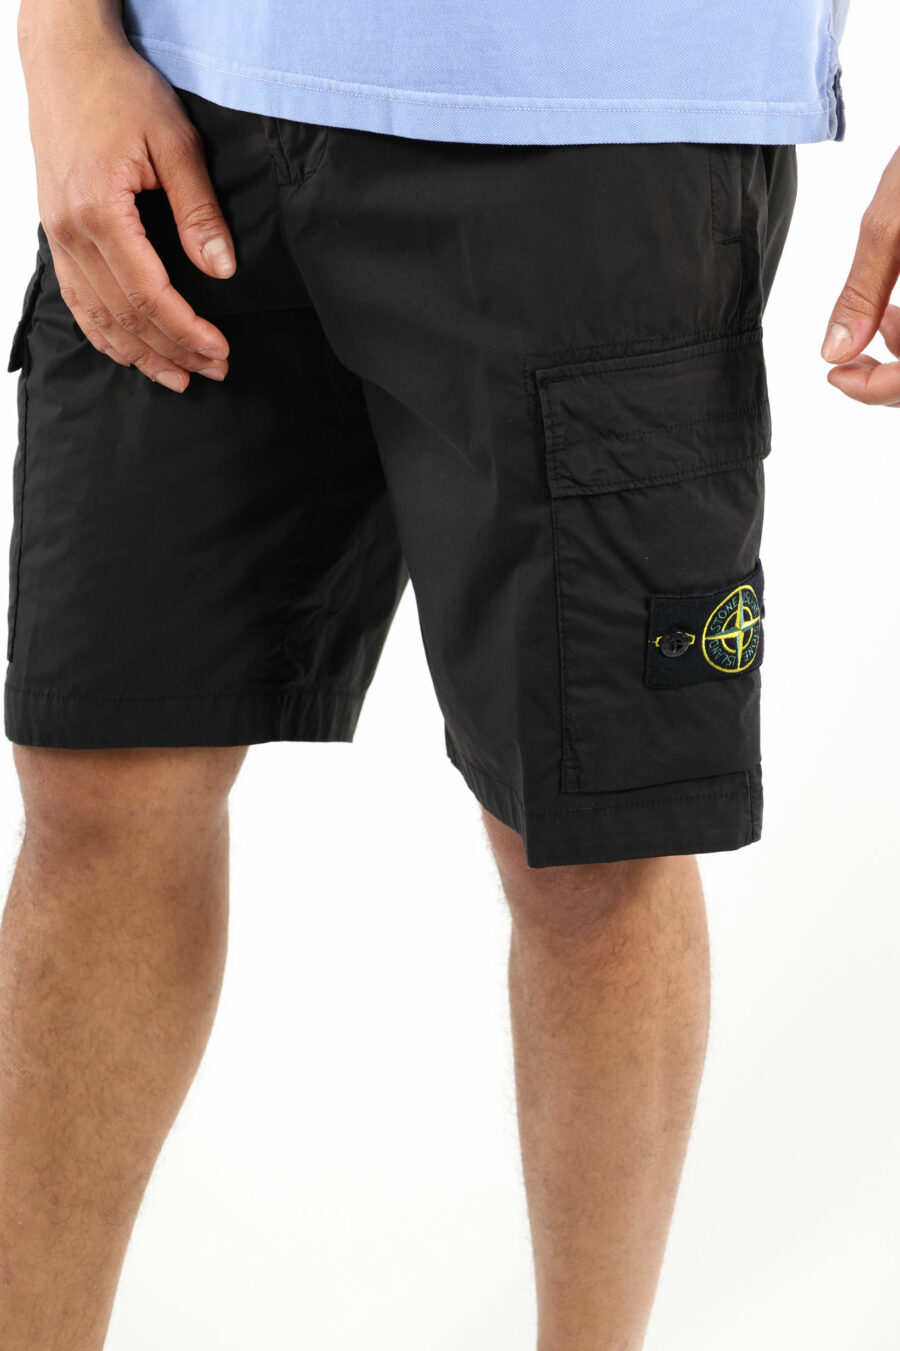 Pantalón corto negro estilo cargo con logo parche brújula - 111387